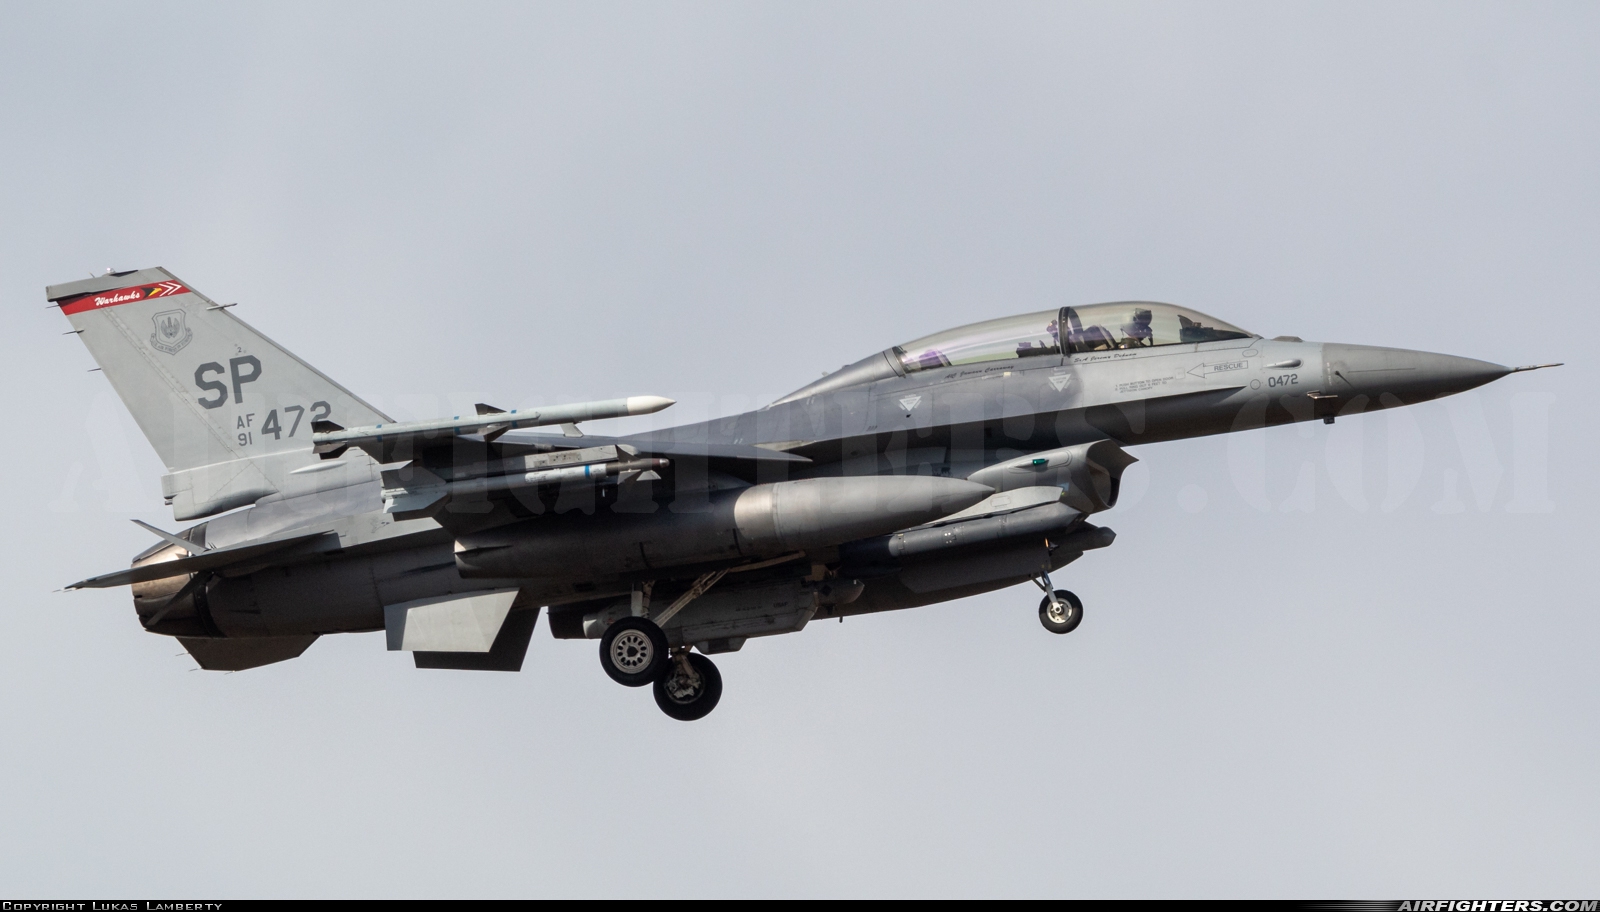 USA - Air Force General Dynamics F-16D Fighting Falcon 91-0472 at Spangdahlem (SPM / ETAD), Germany